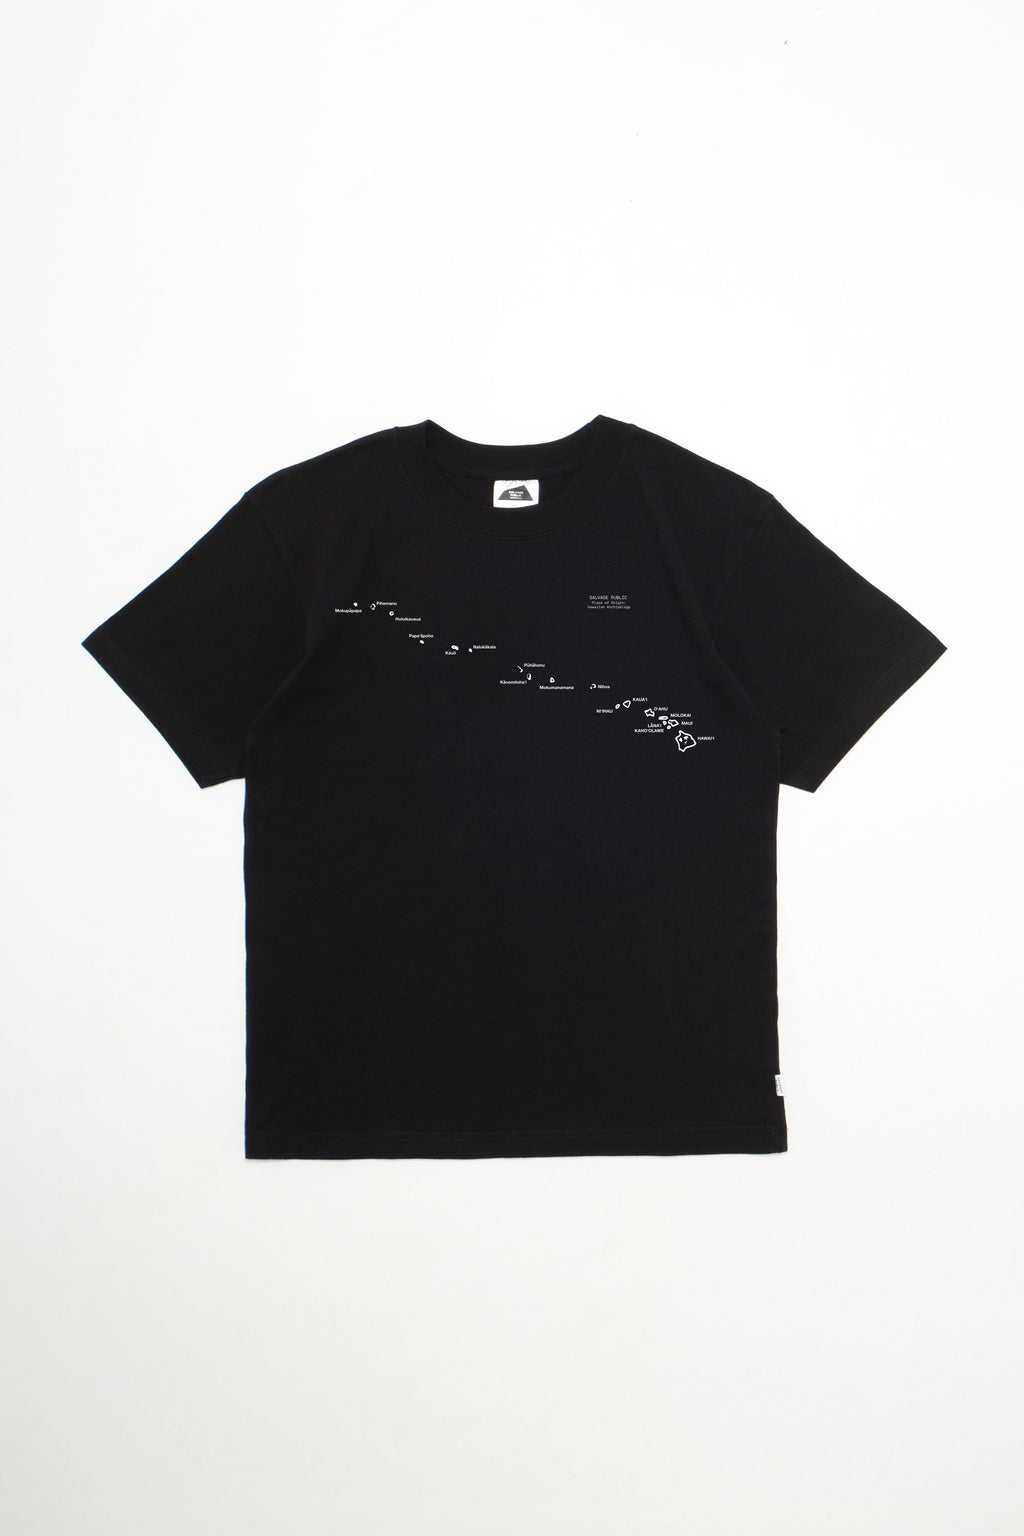 T-Shirt - Hawaiian Archipelago - Black/White